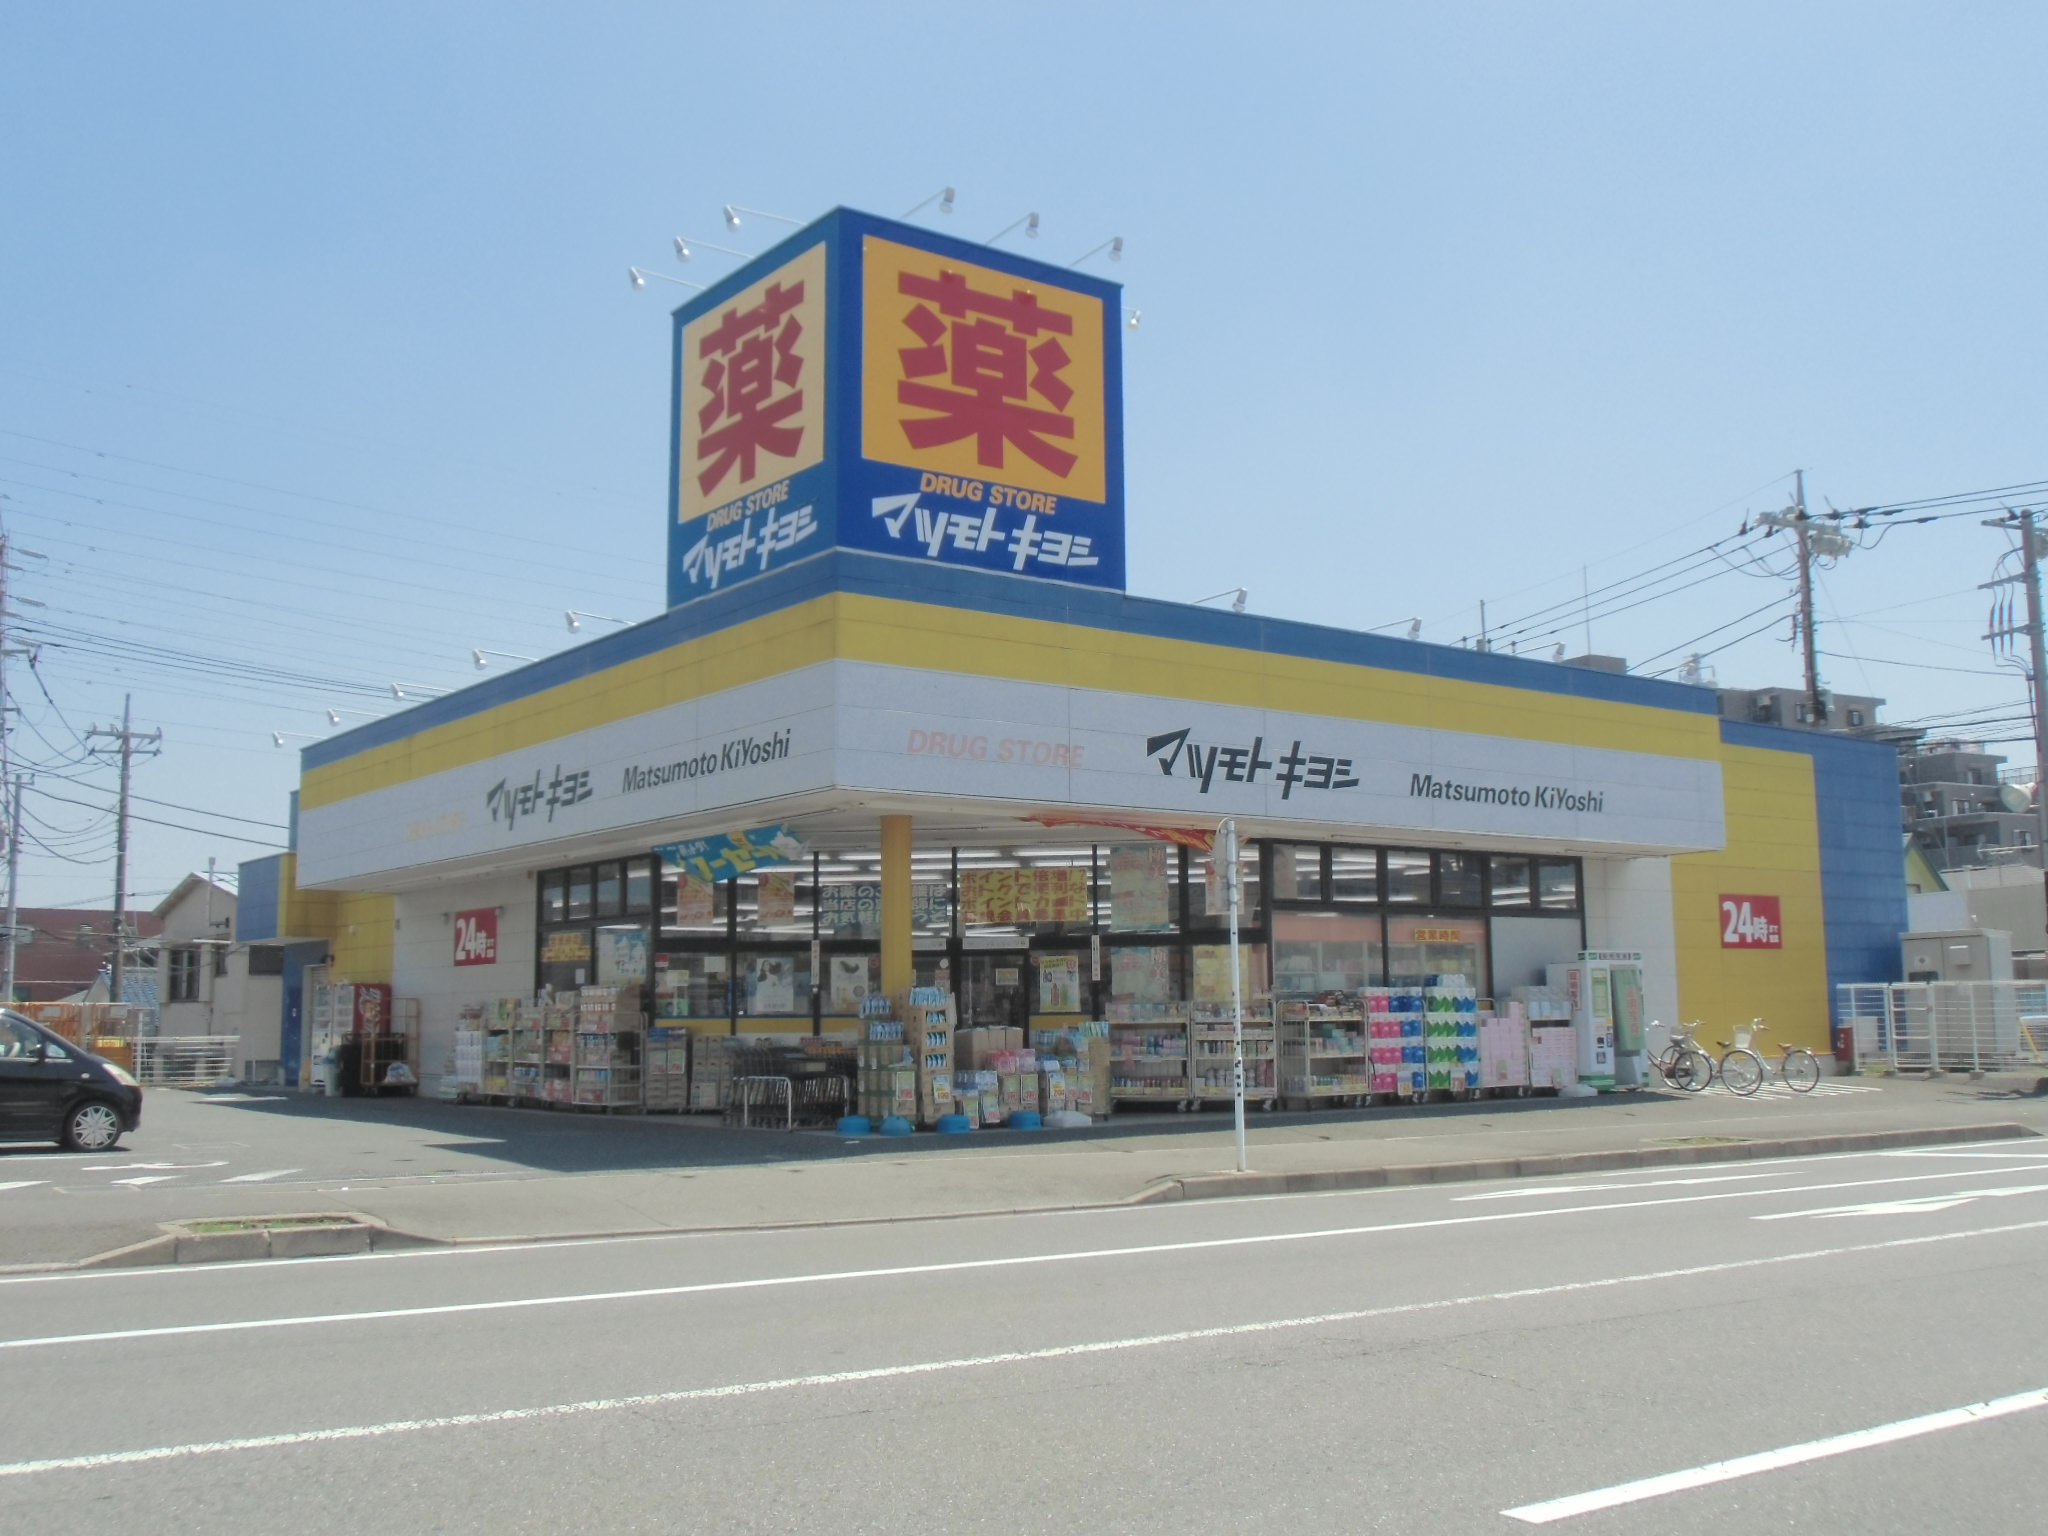 Dorakkusutoa. Matsumotokiyoshi drugstore new Toga shop 547m until (drugstore)